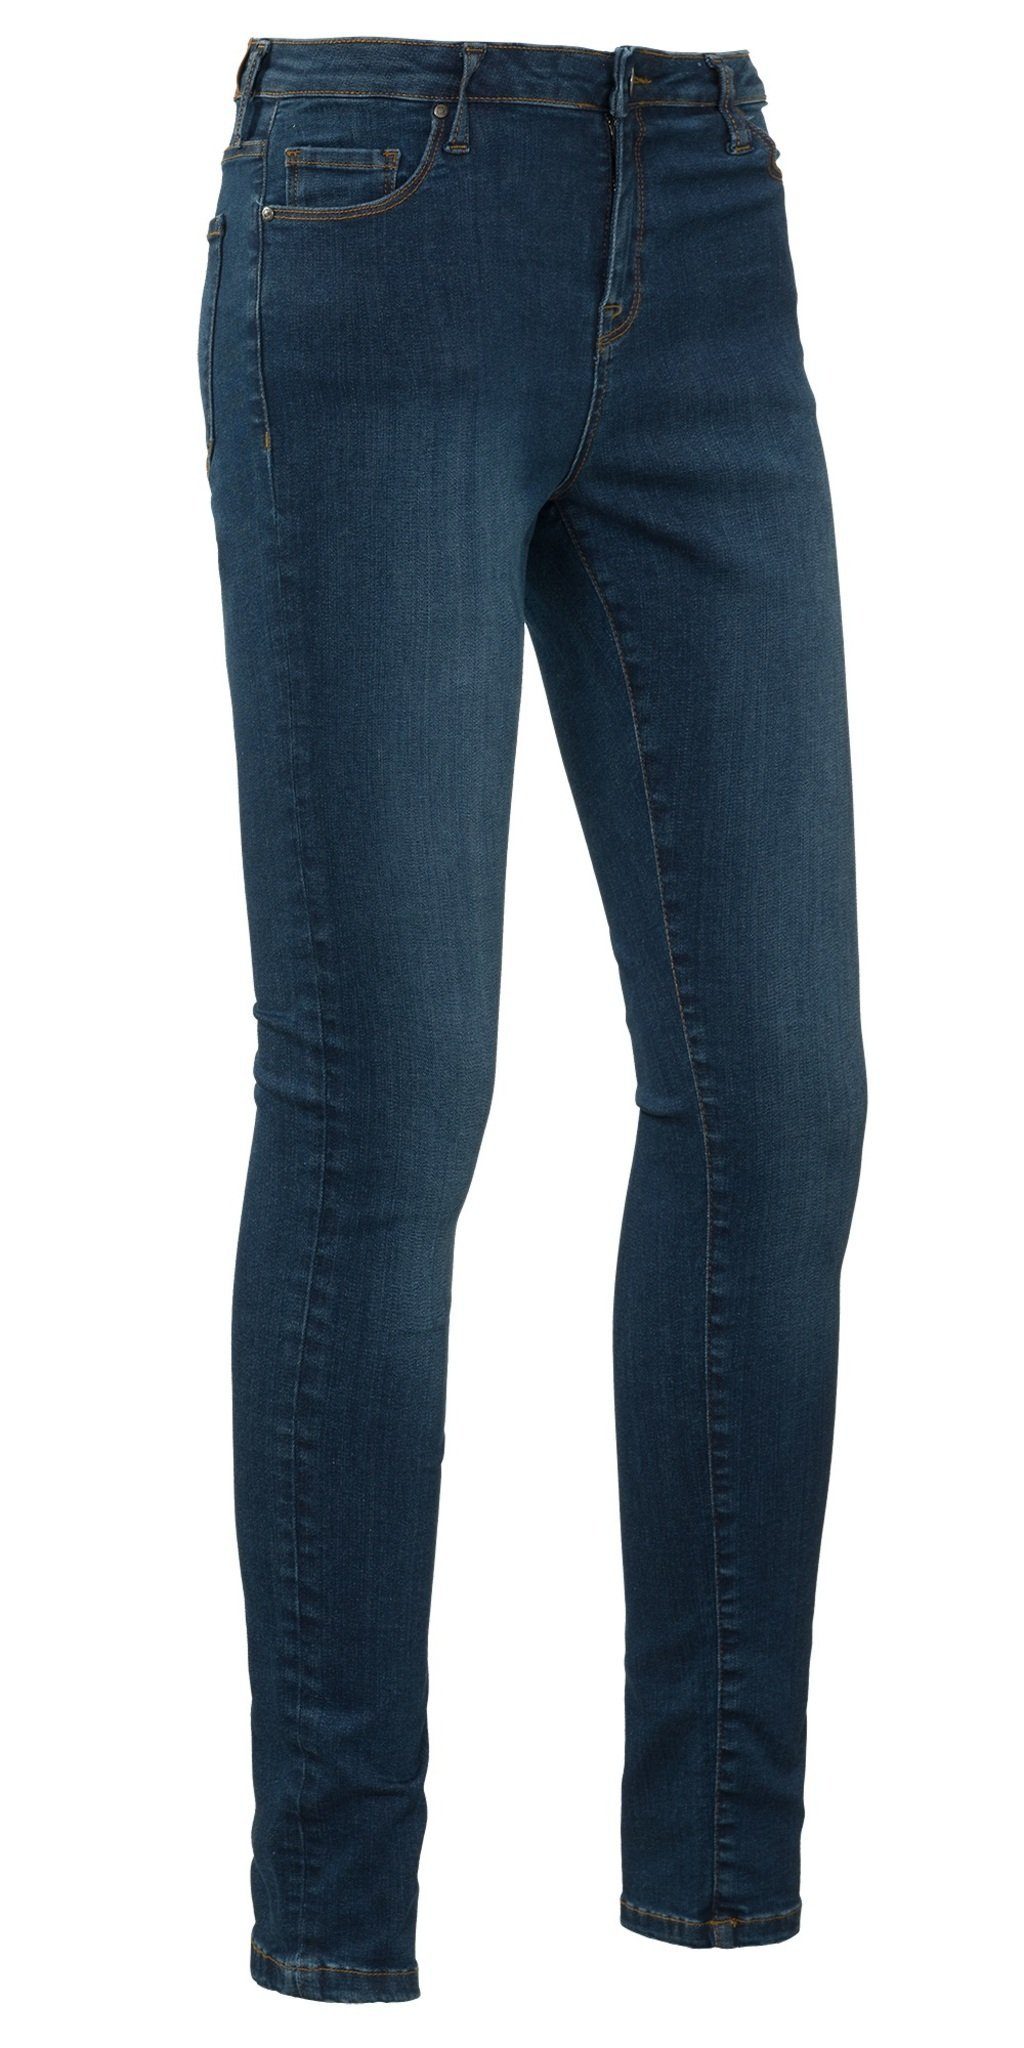 Maison de Paris Hose - c71 Five-Pocket-Stil Figurbetonende Kate blau Jeanshose Damen im Jeans 5-Pocket-Hose